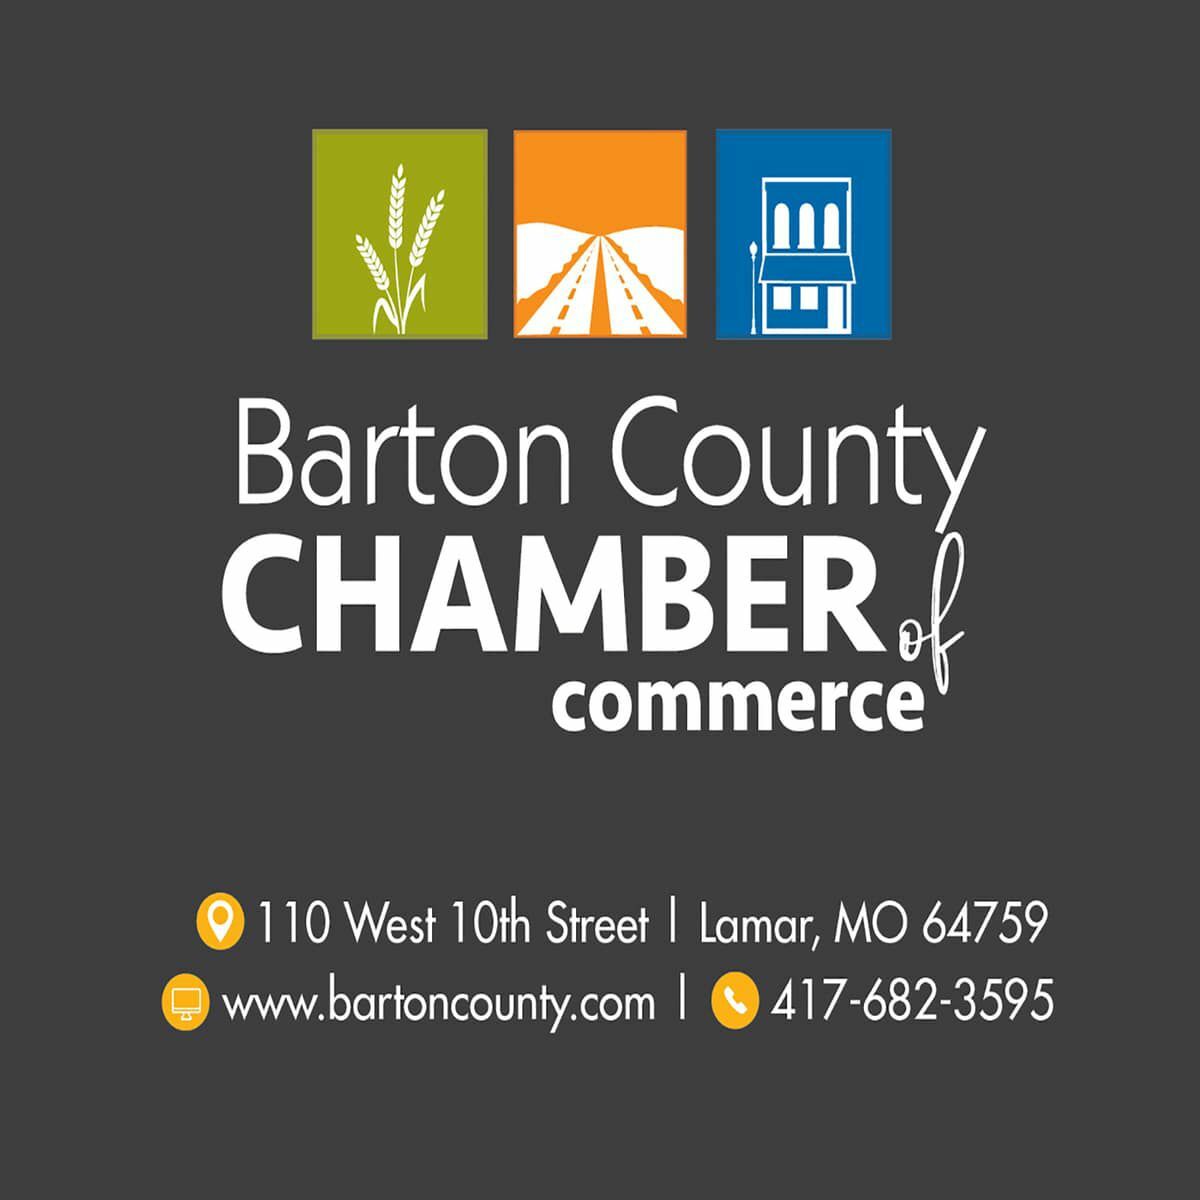 Barton County Chamber of Commerce